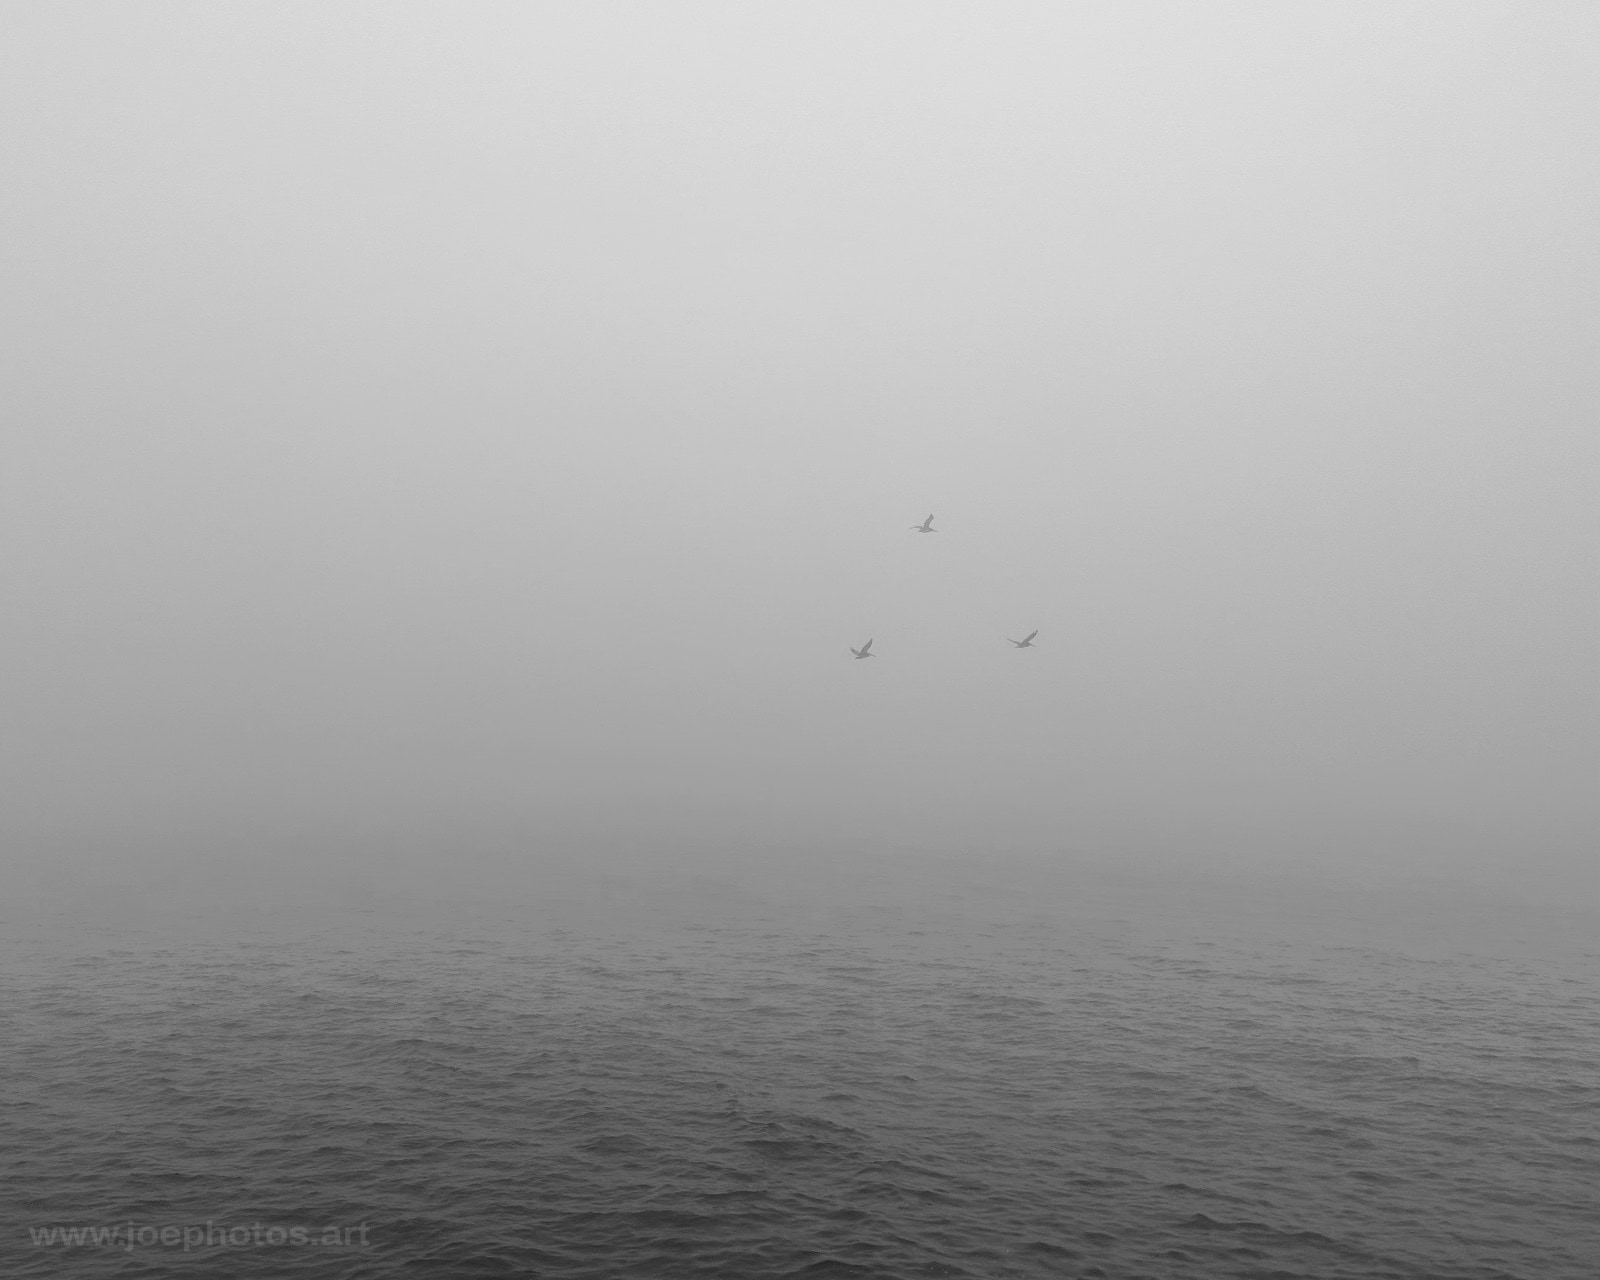 Monochrome hazy birds over ocean.